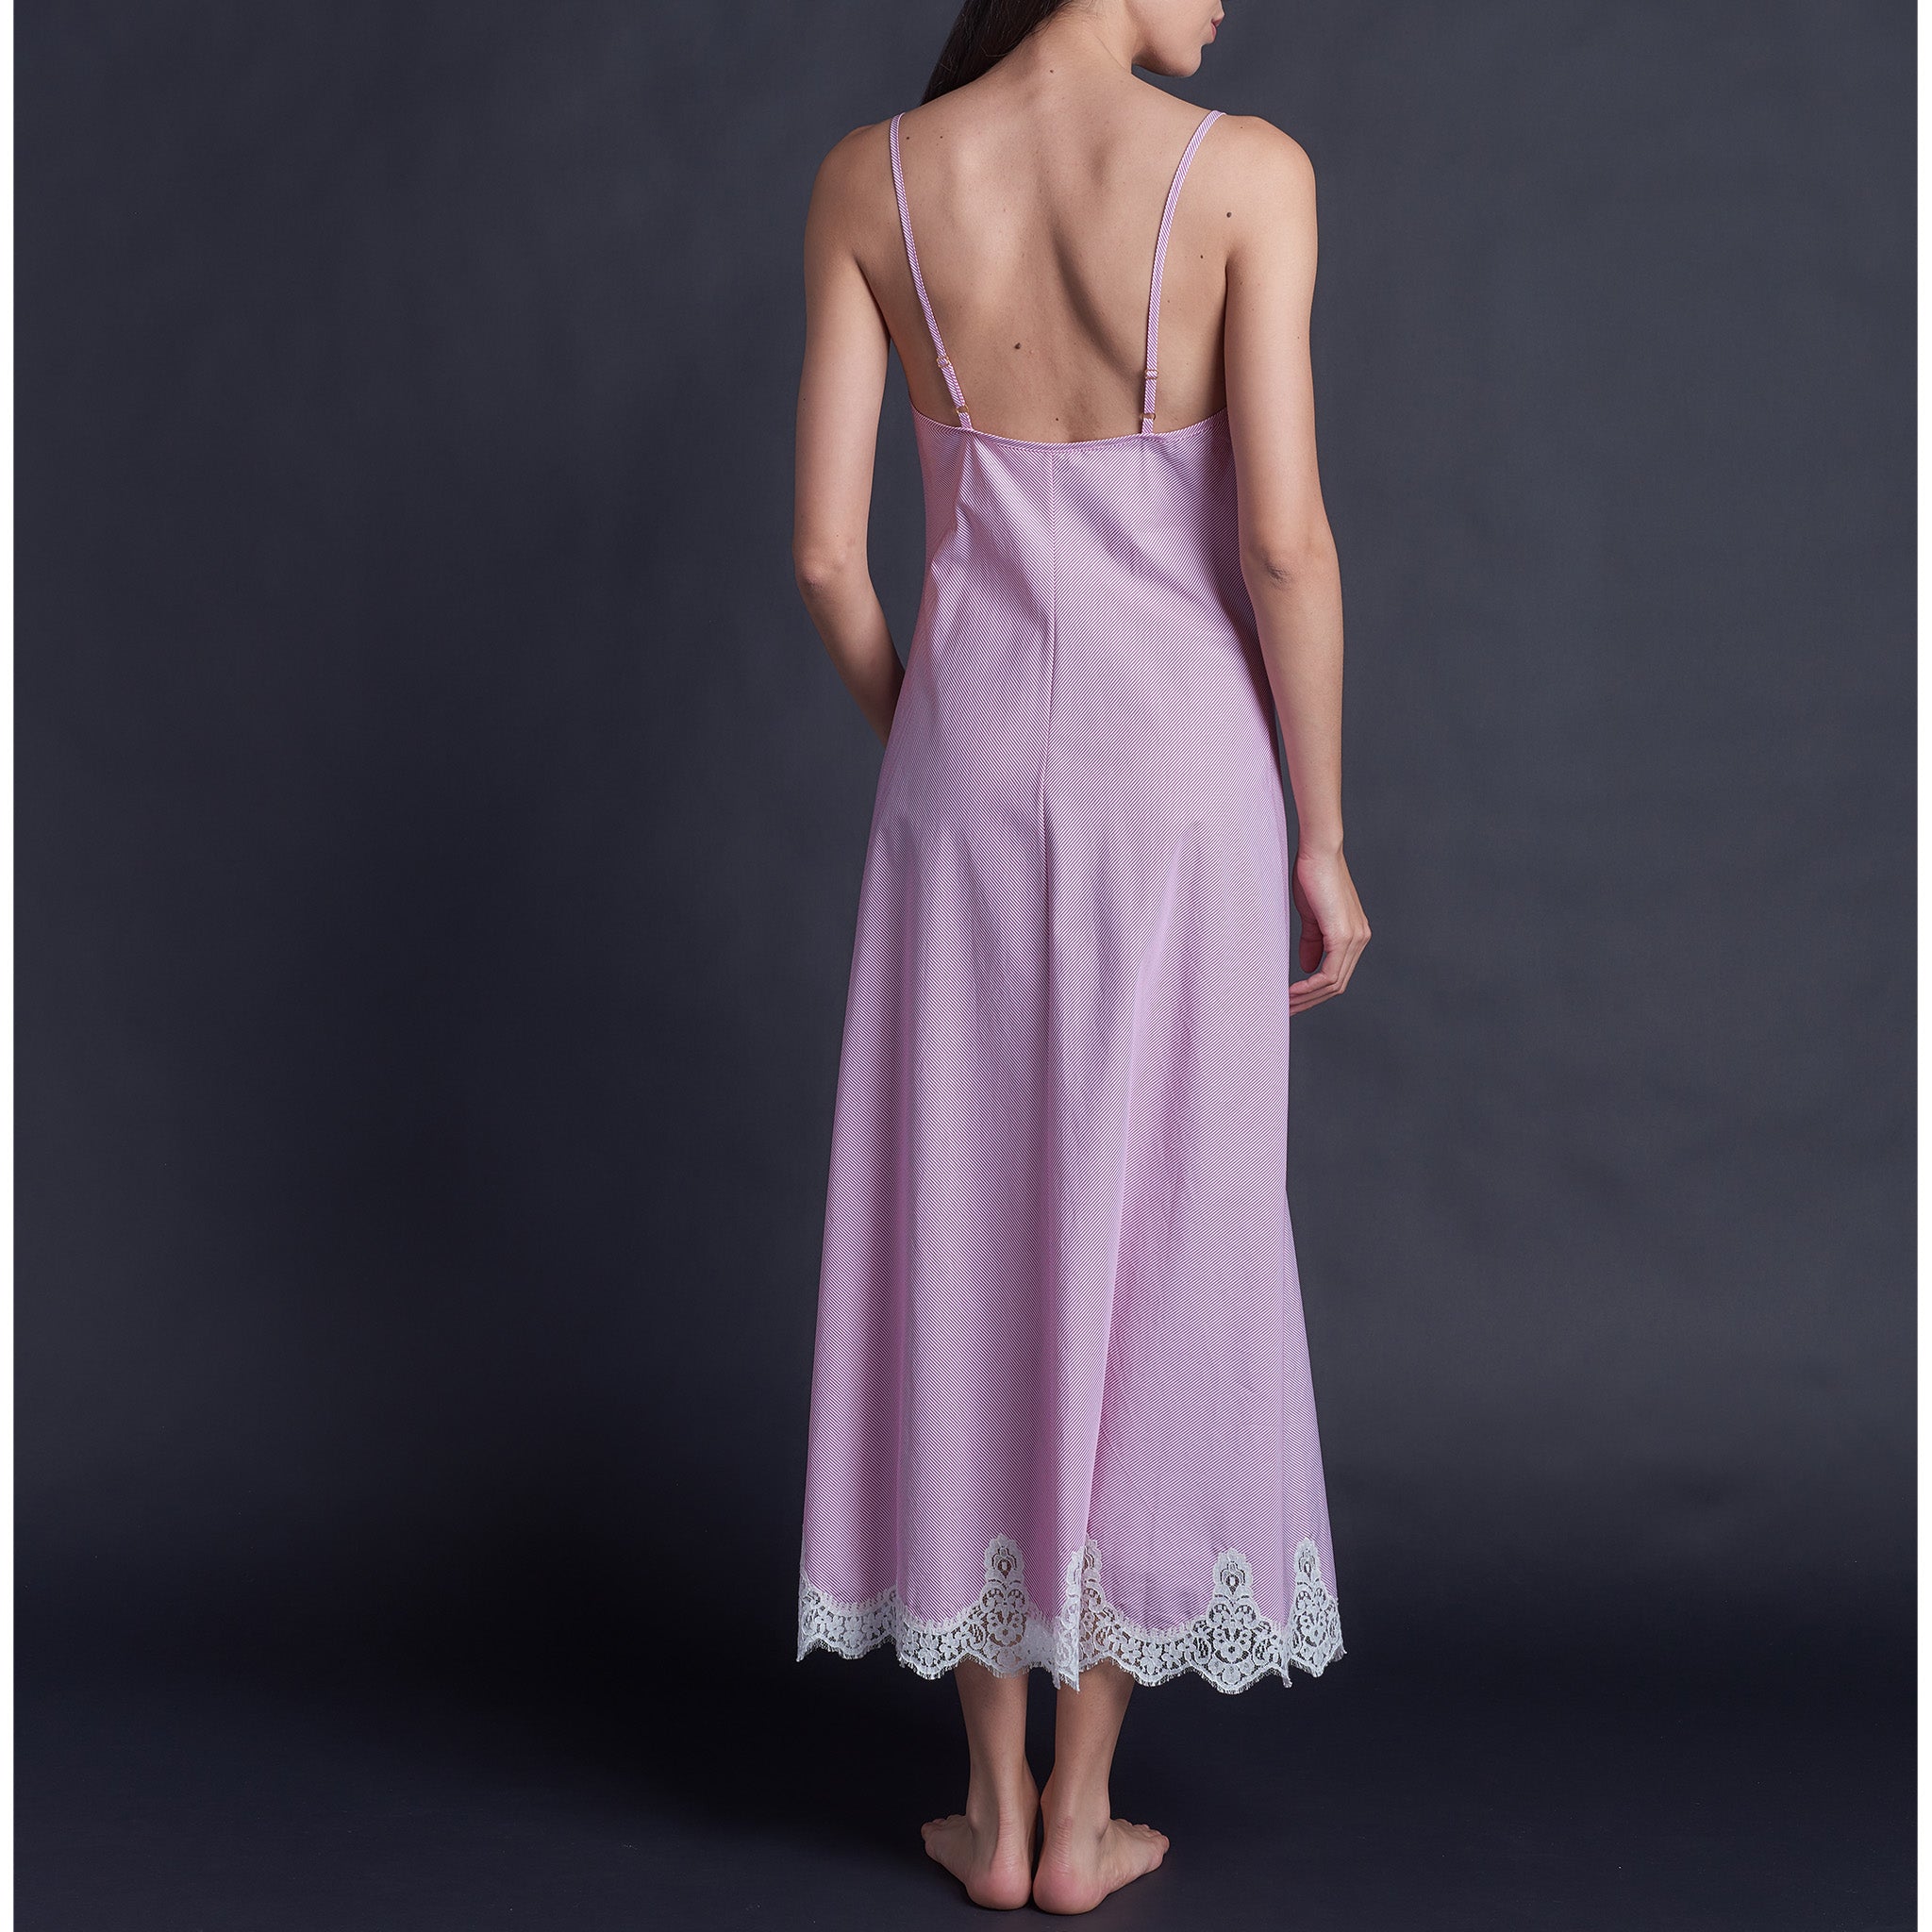 Juno Slip Dress in Italian Cotton Pink Stripe with Lace